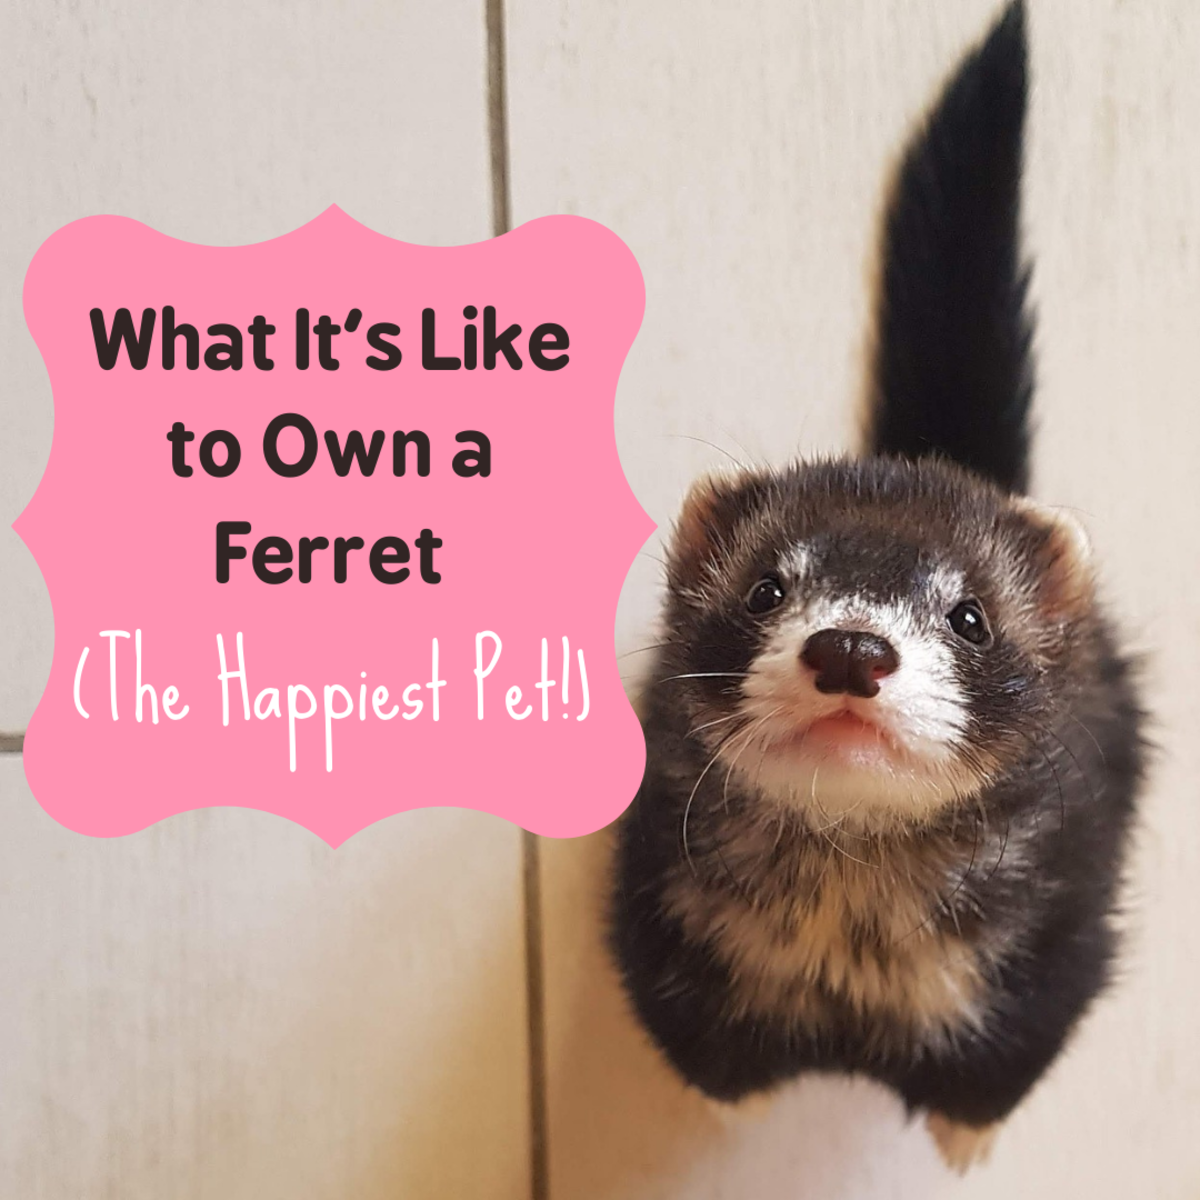 Meet the happy, exuberant ferret: a wonderful pet.